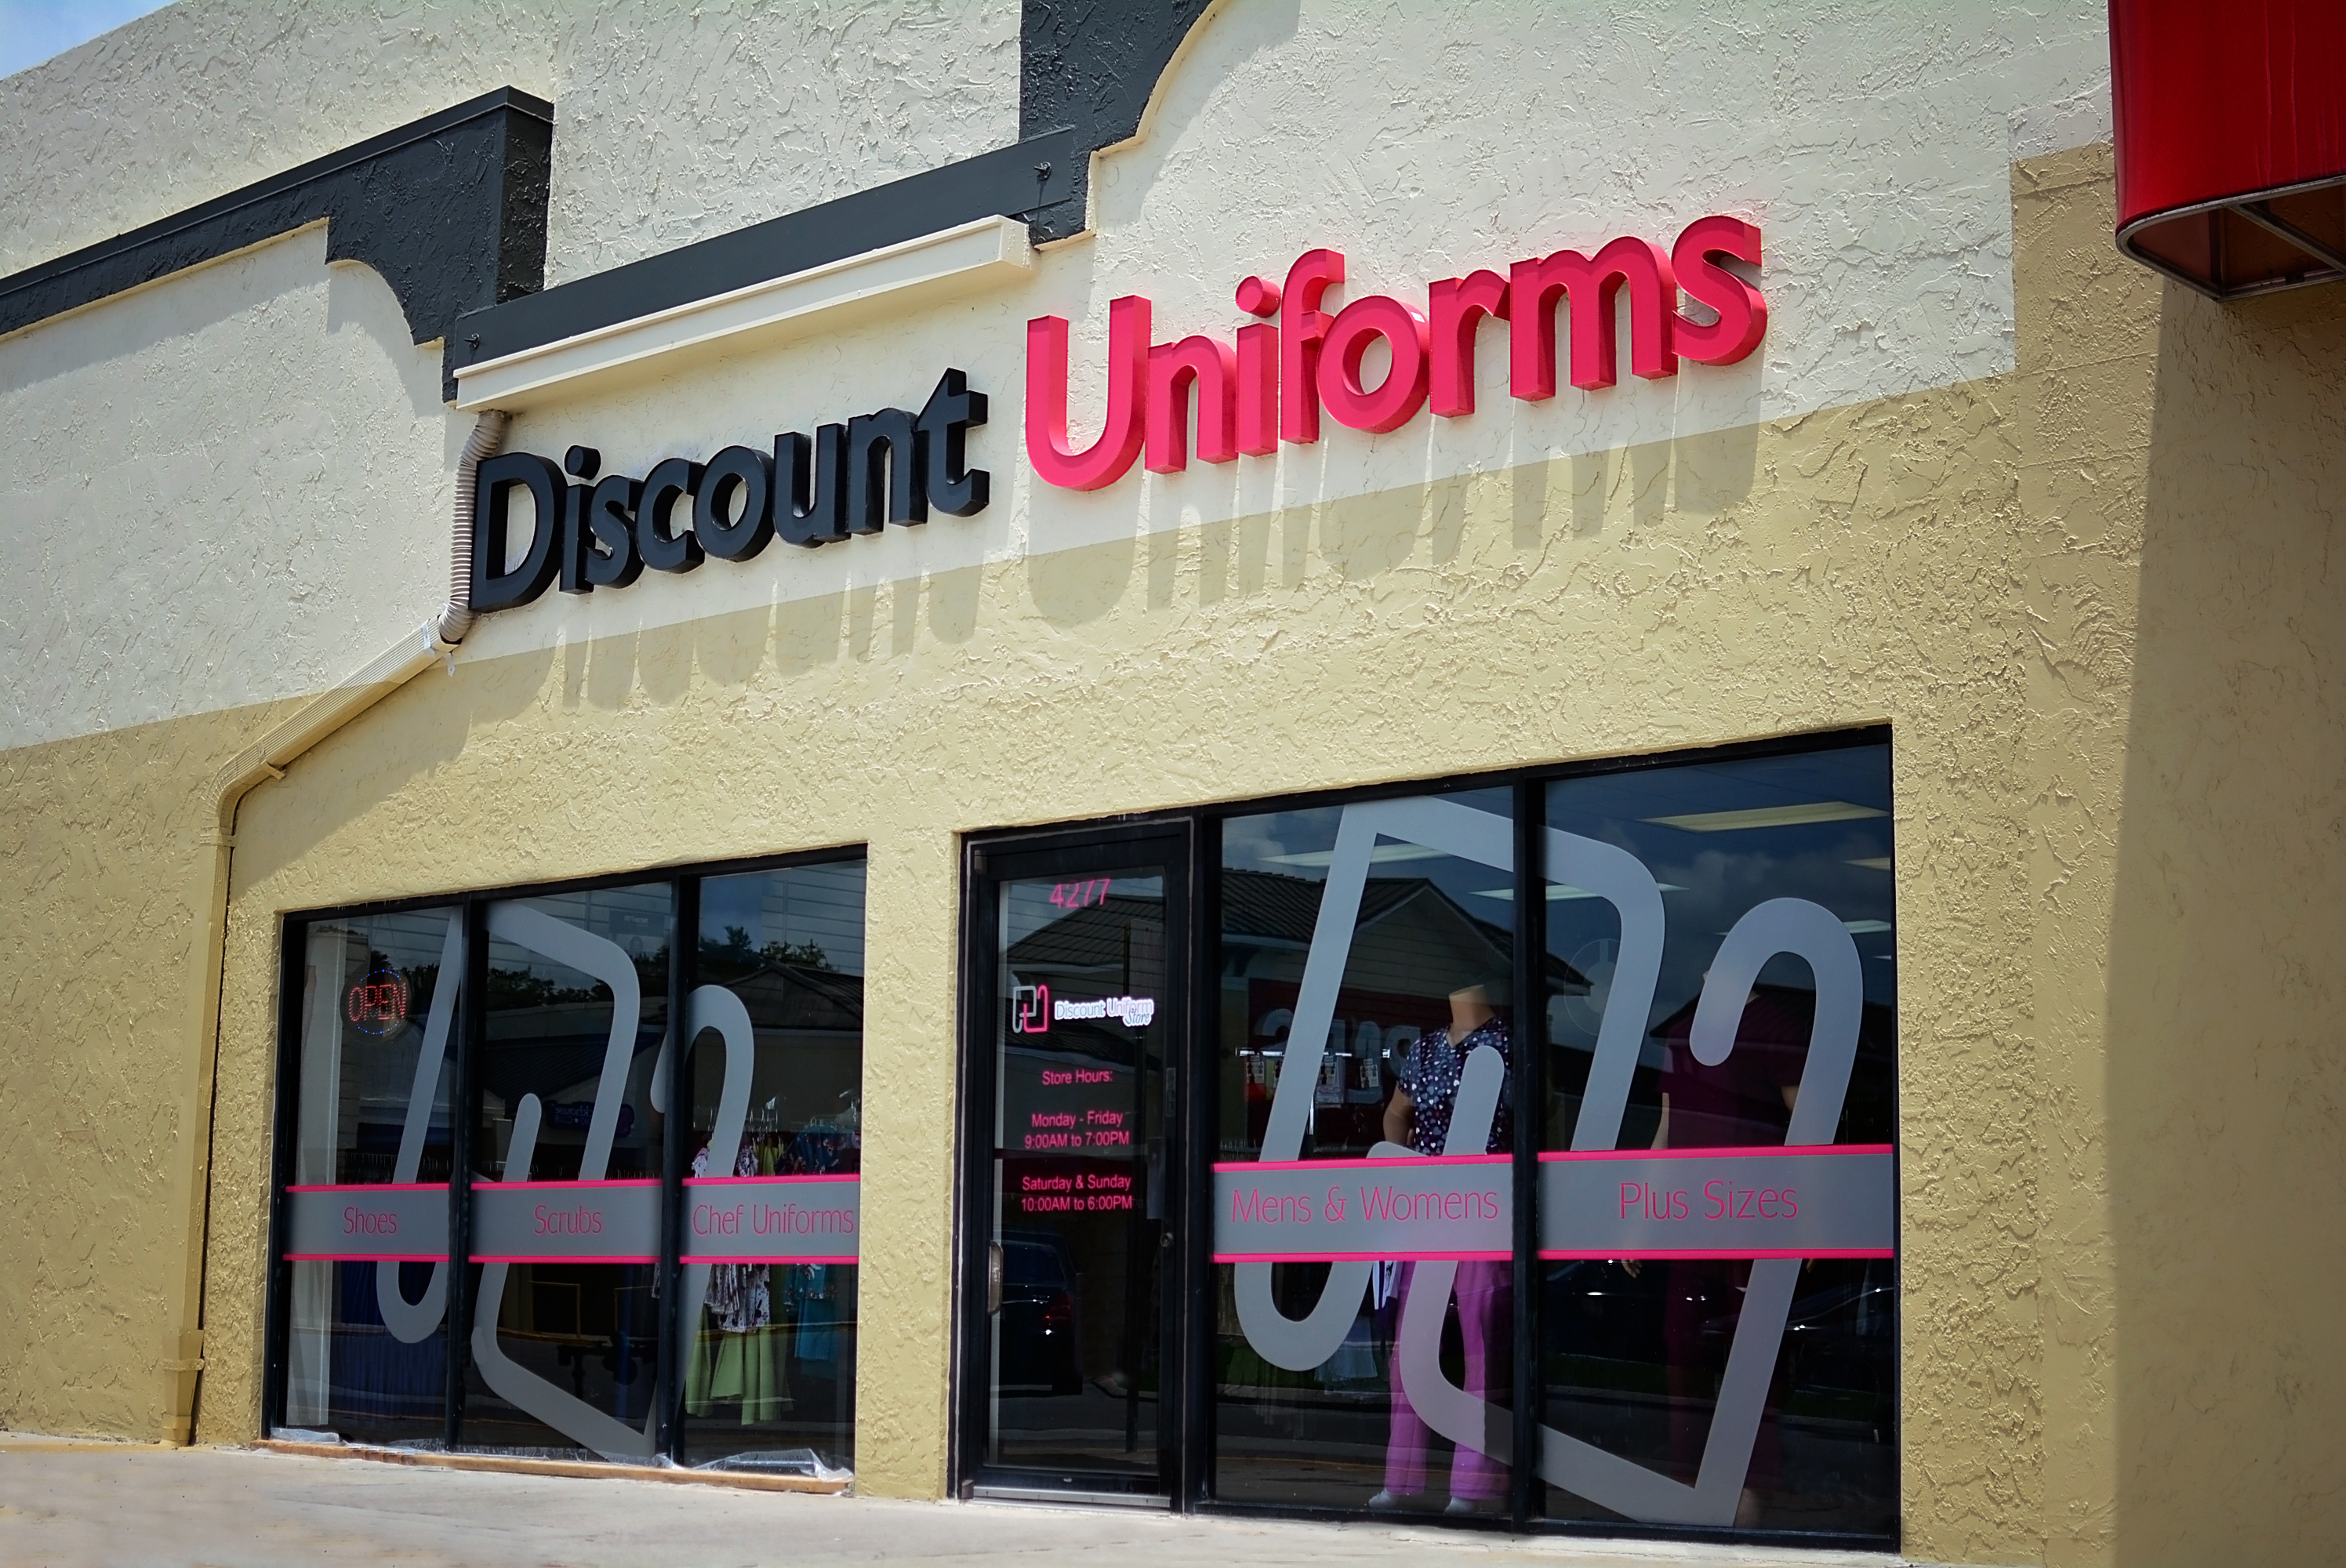 Discount Uniform Store Coupons near me in Lakeland, FL ...